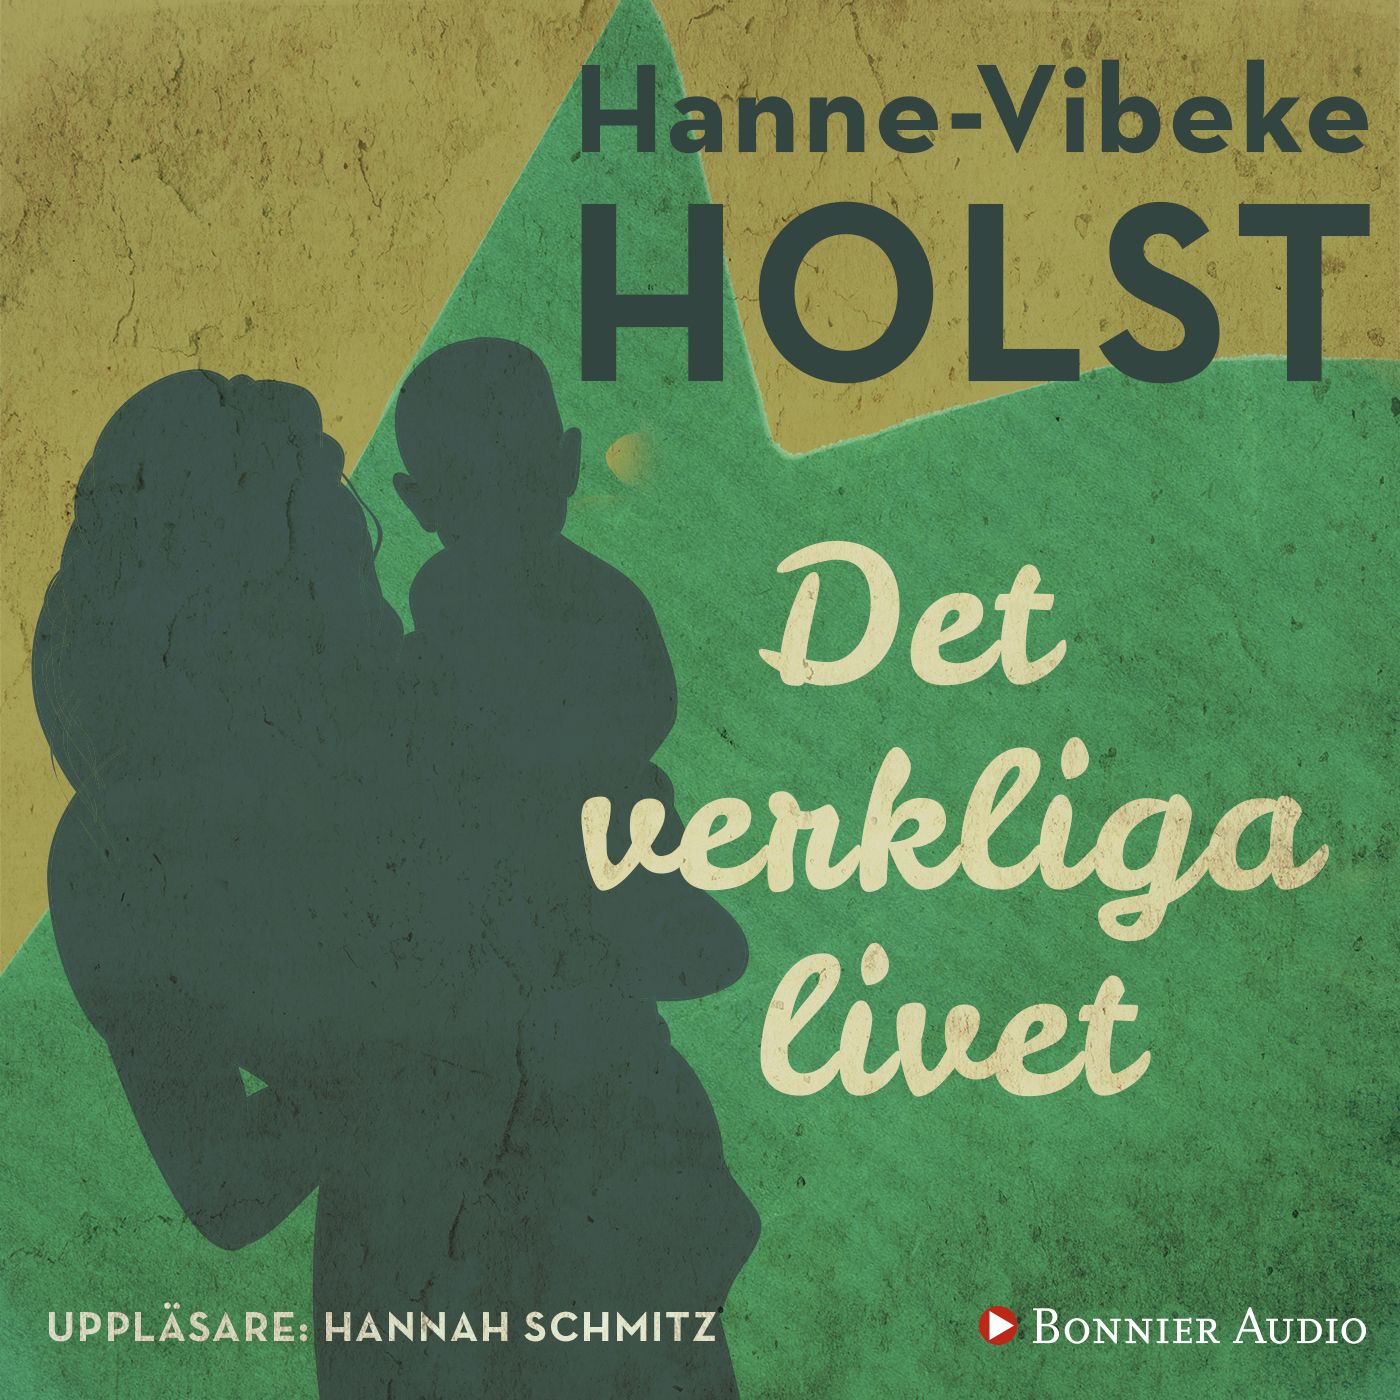 Det verkliga livet, ljudbok av Hanne-Vibeke Holst